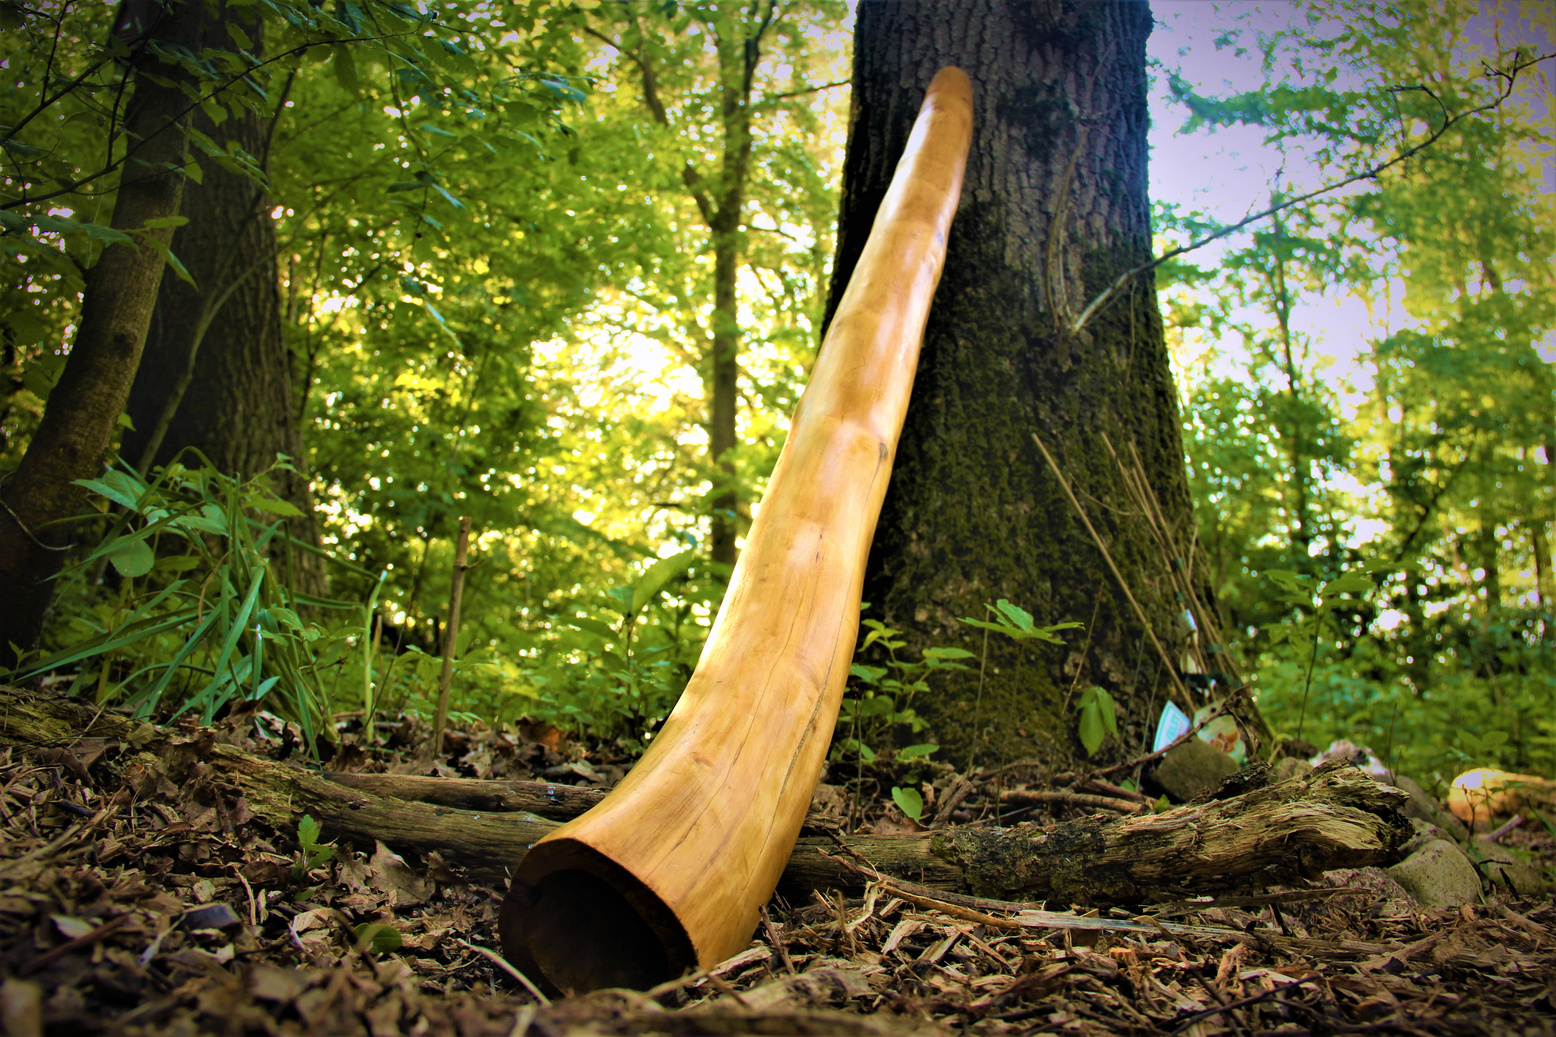 Didgeridoo in the Forest